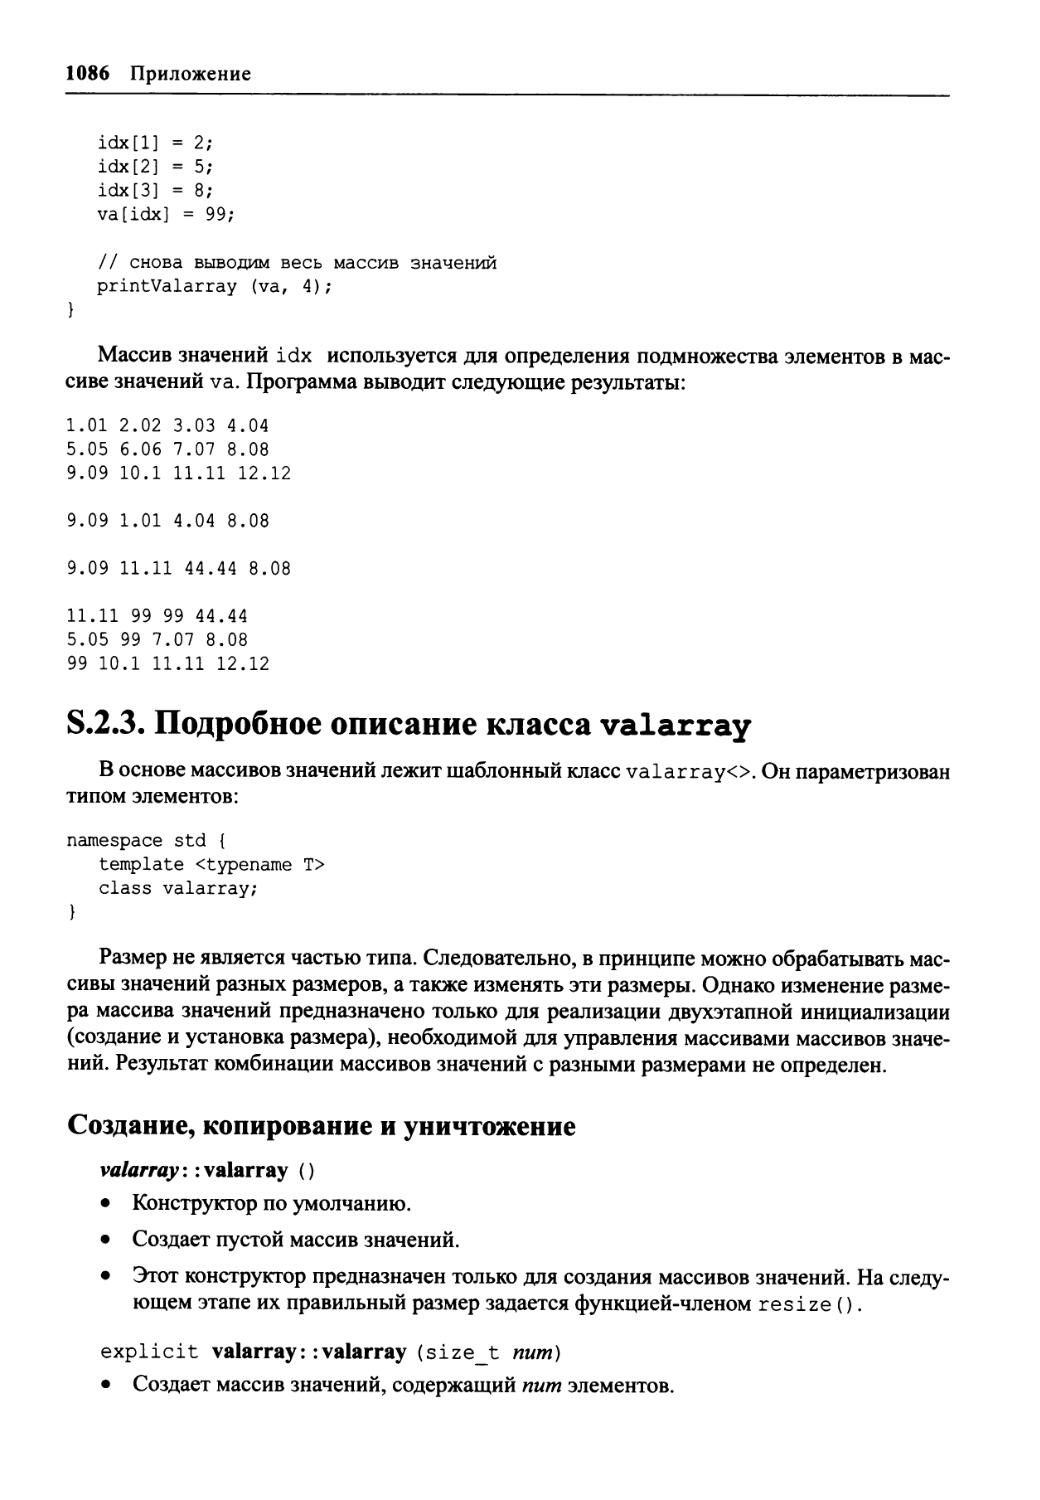 S.2.3. Подробное описание класса valarray